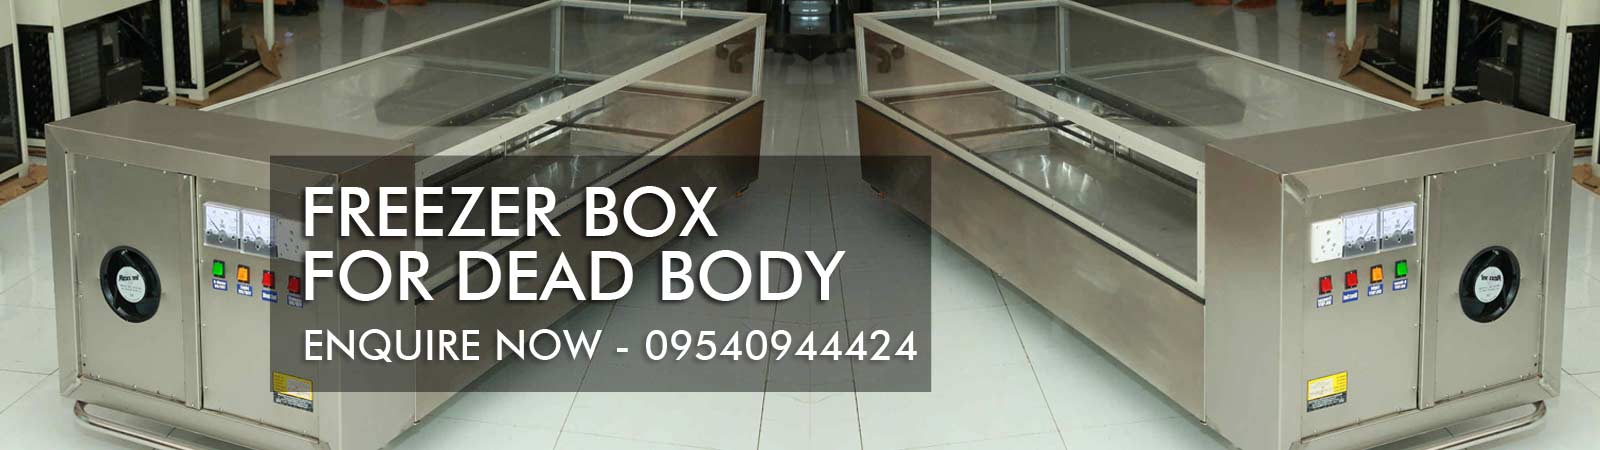 dead body freezer box on hire